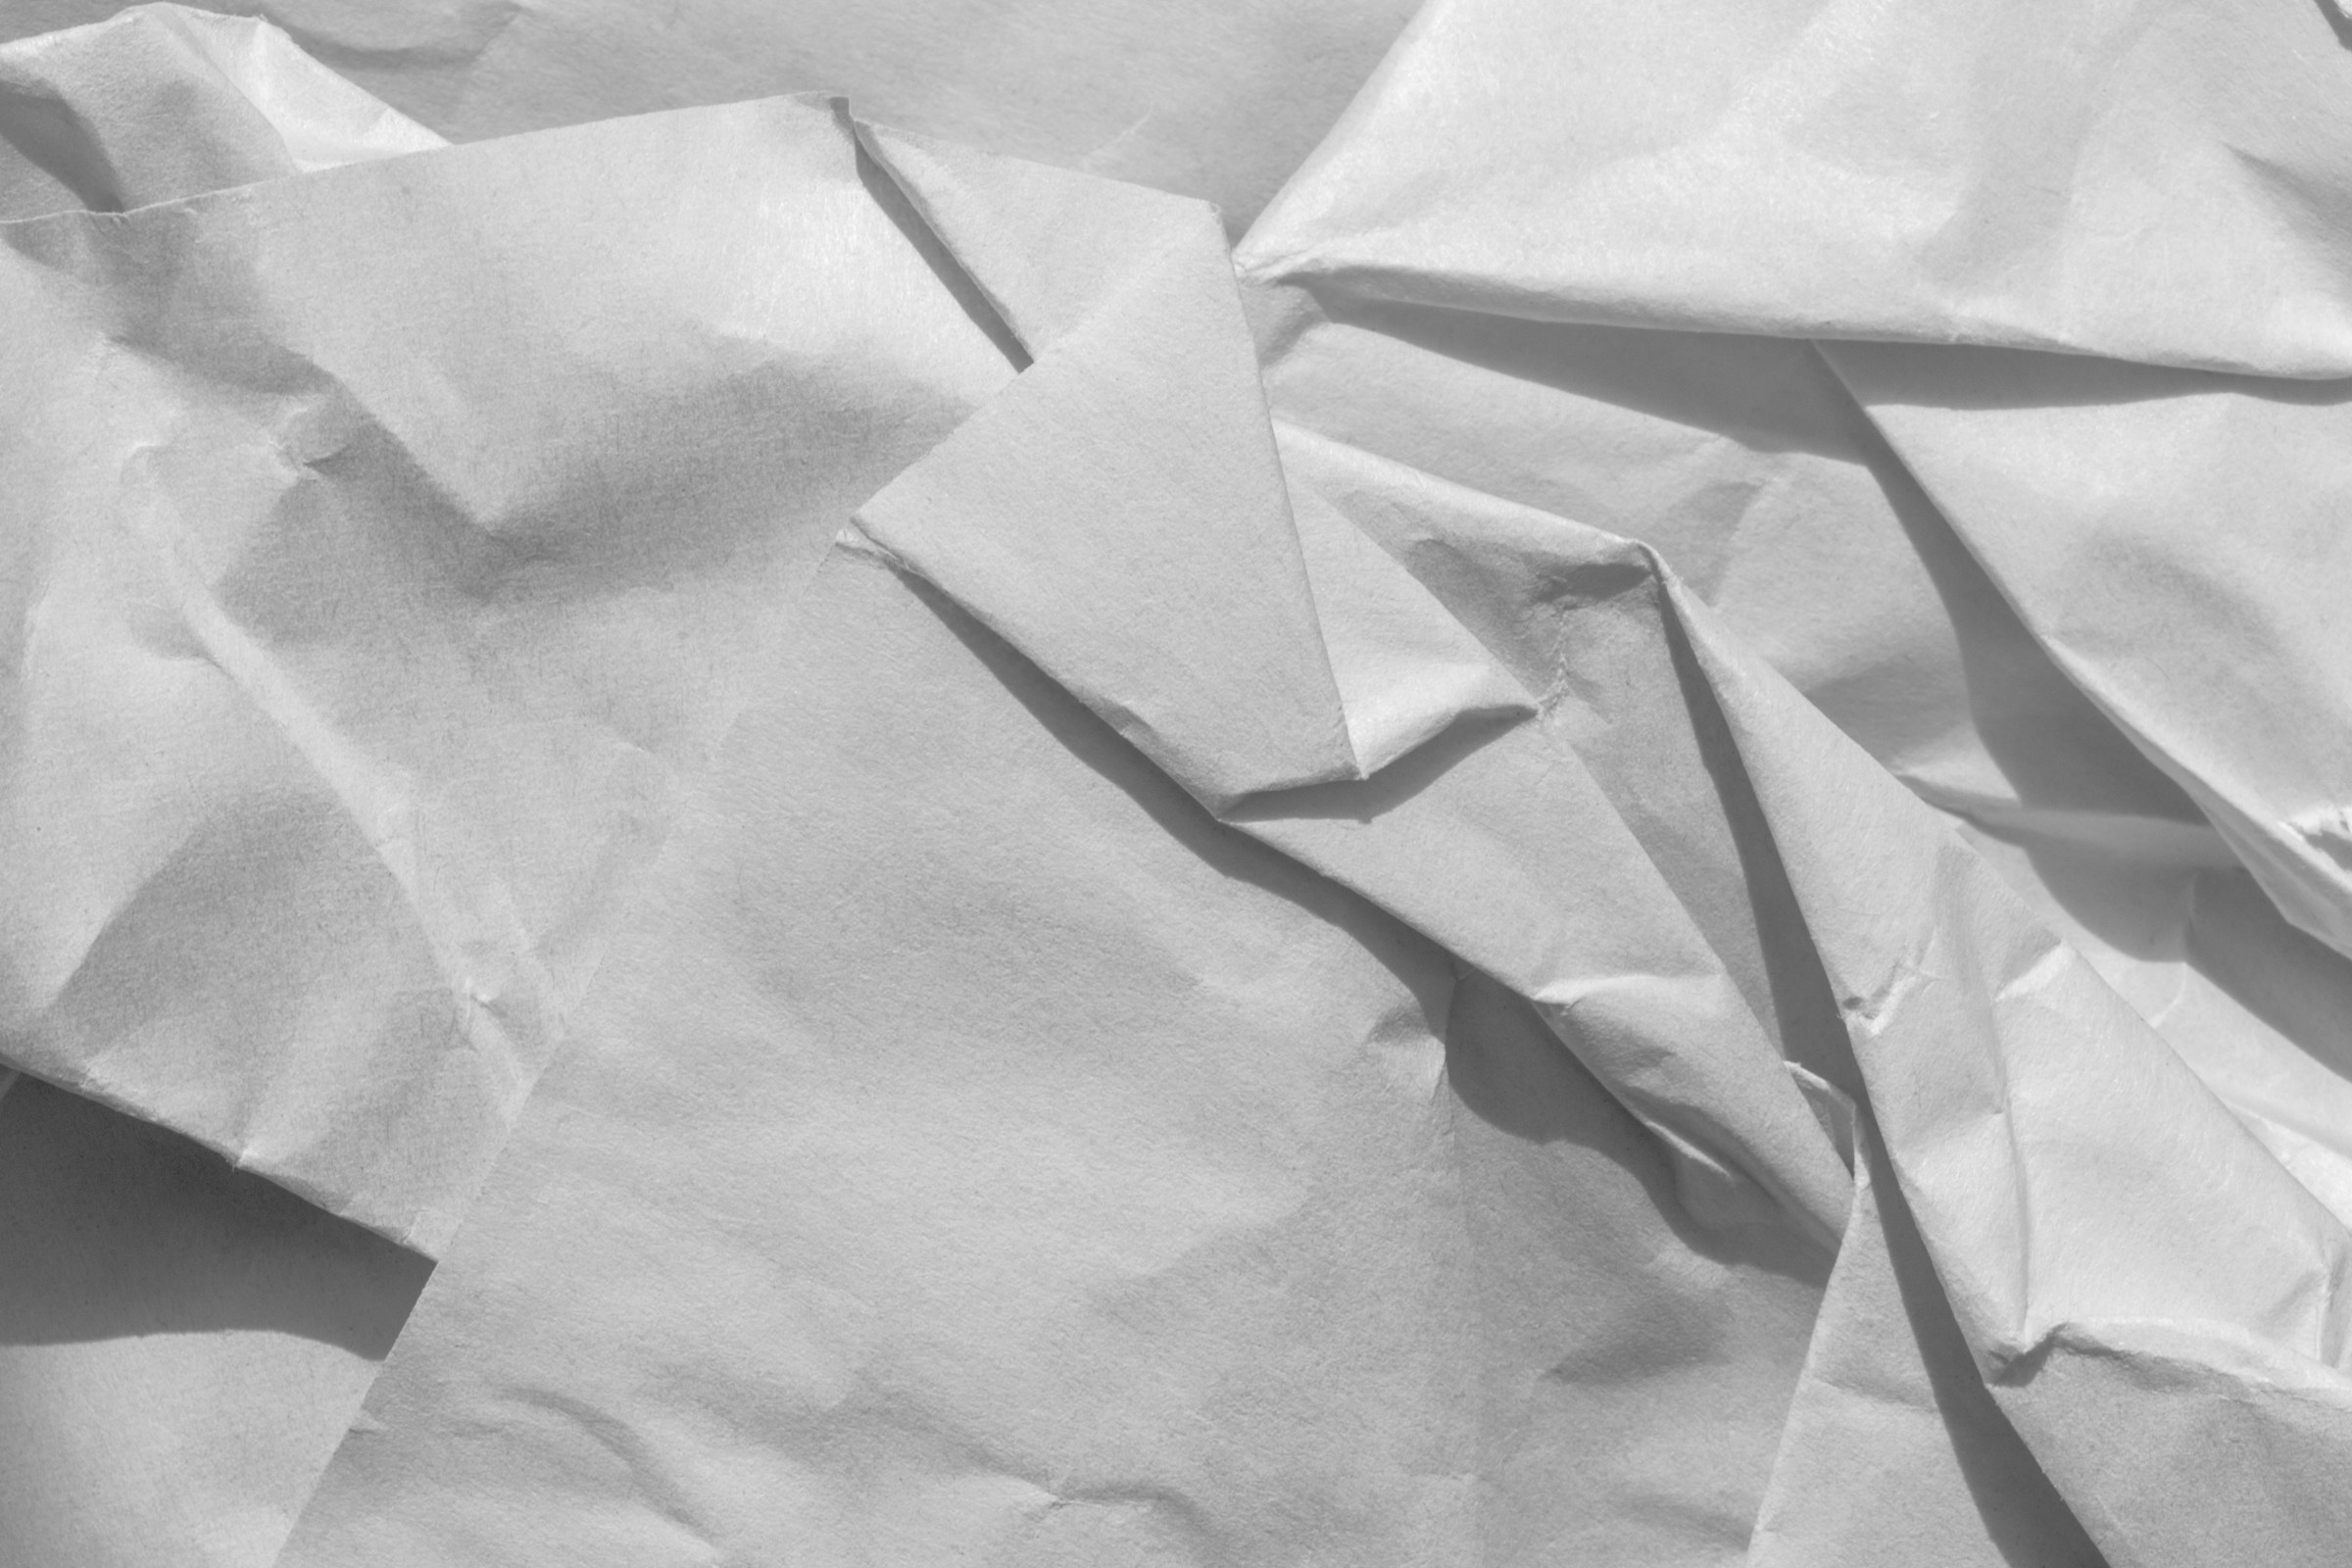 A crumbled piece of paper | Source: Unsplash